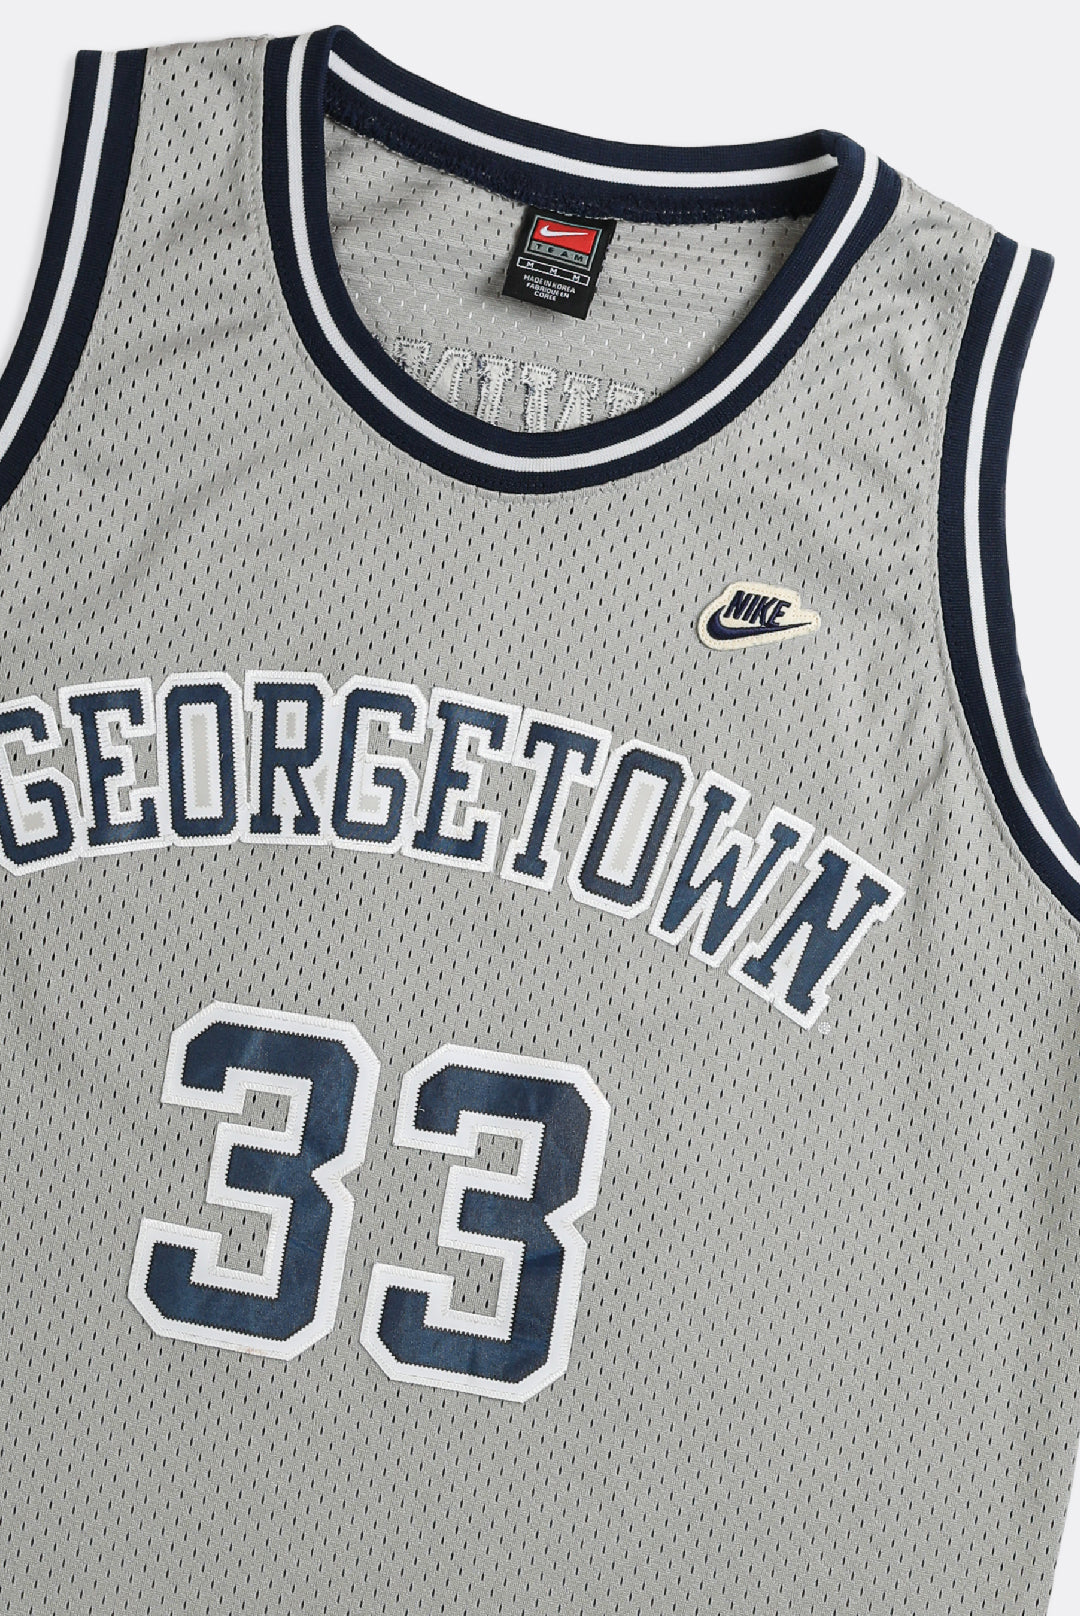 Georgetown Jerseys, Georgetown Hoyas Basketball Uniforms